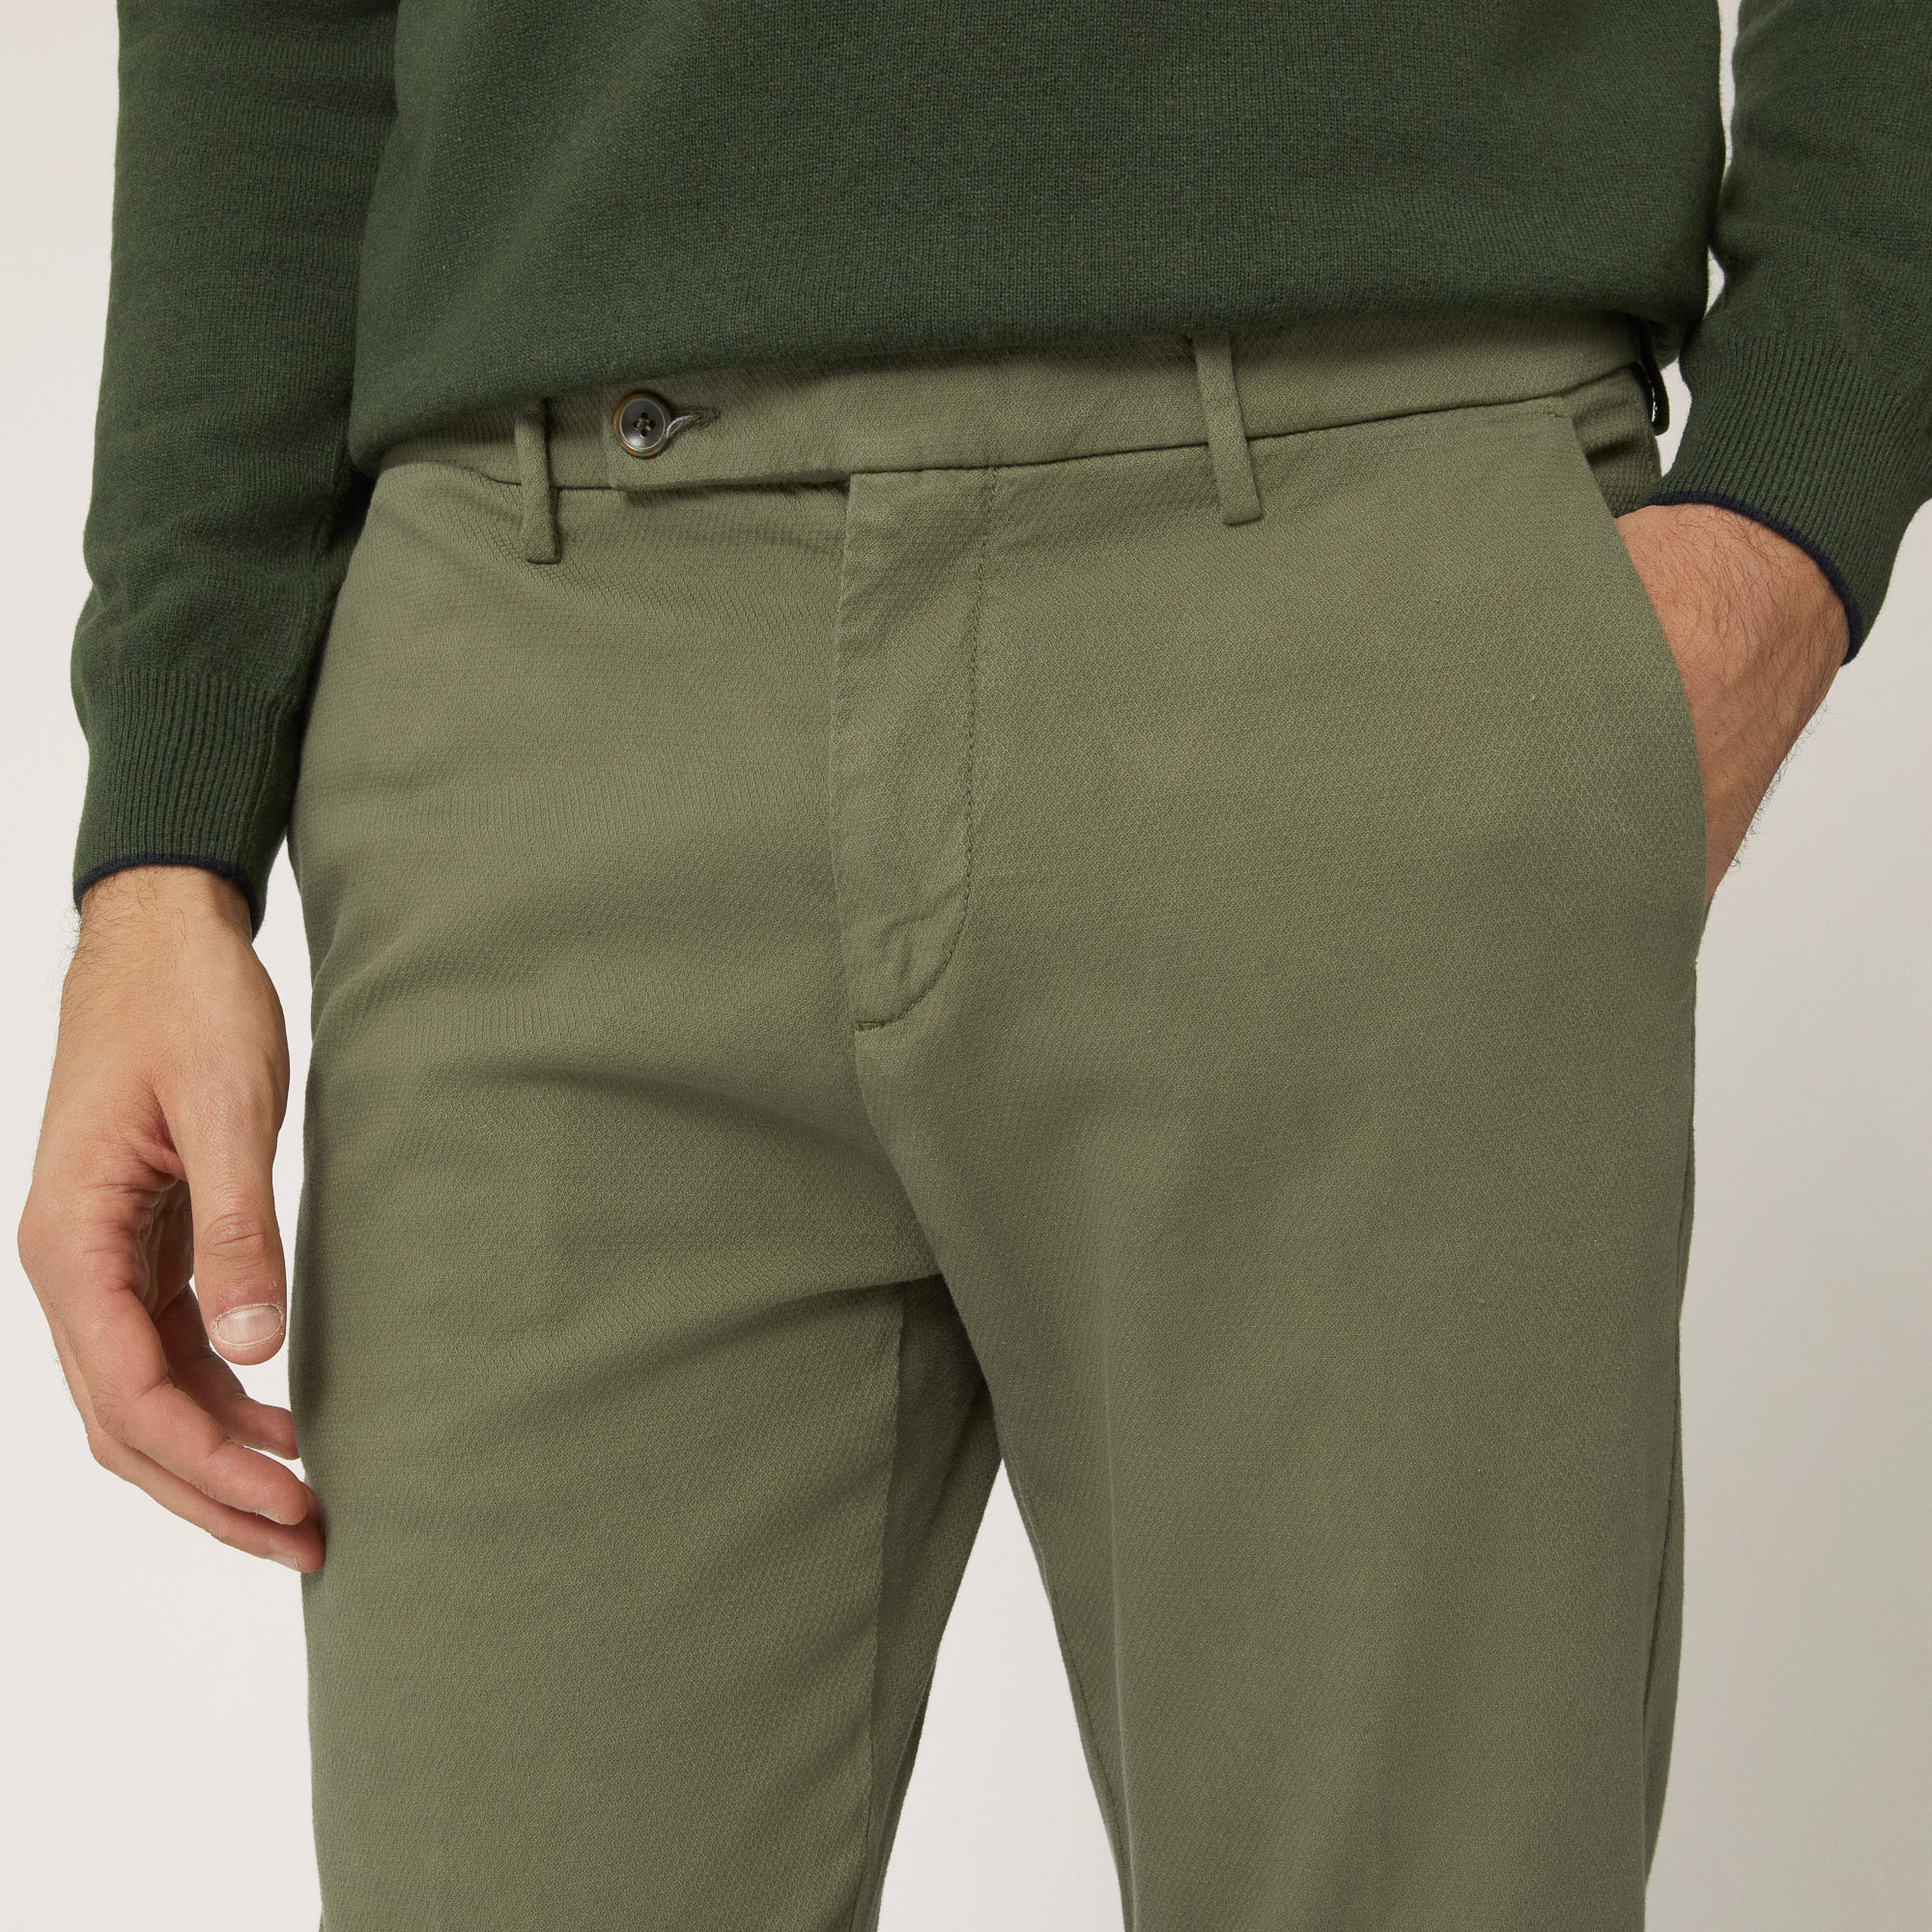 Pantalone In Cotone Stretch, Verde Oliva, large image number 2